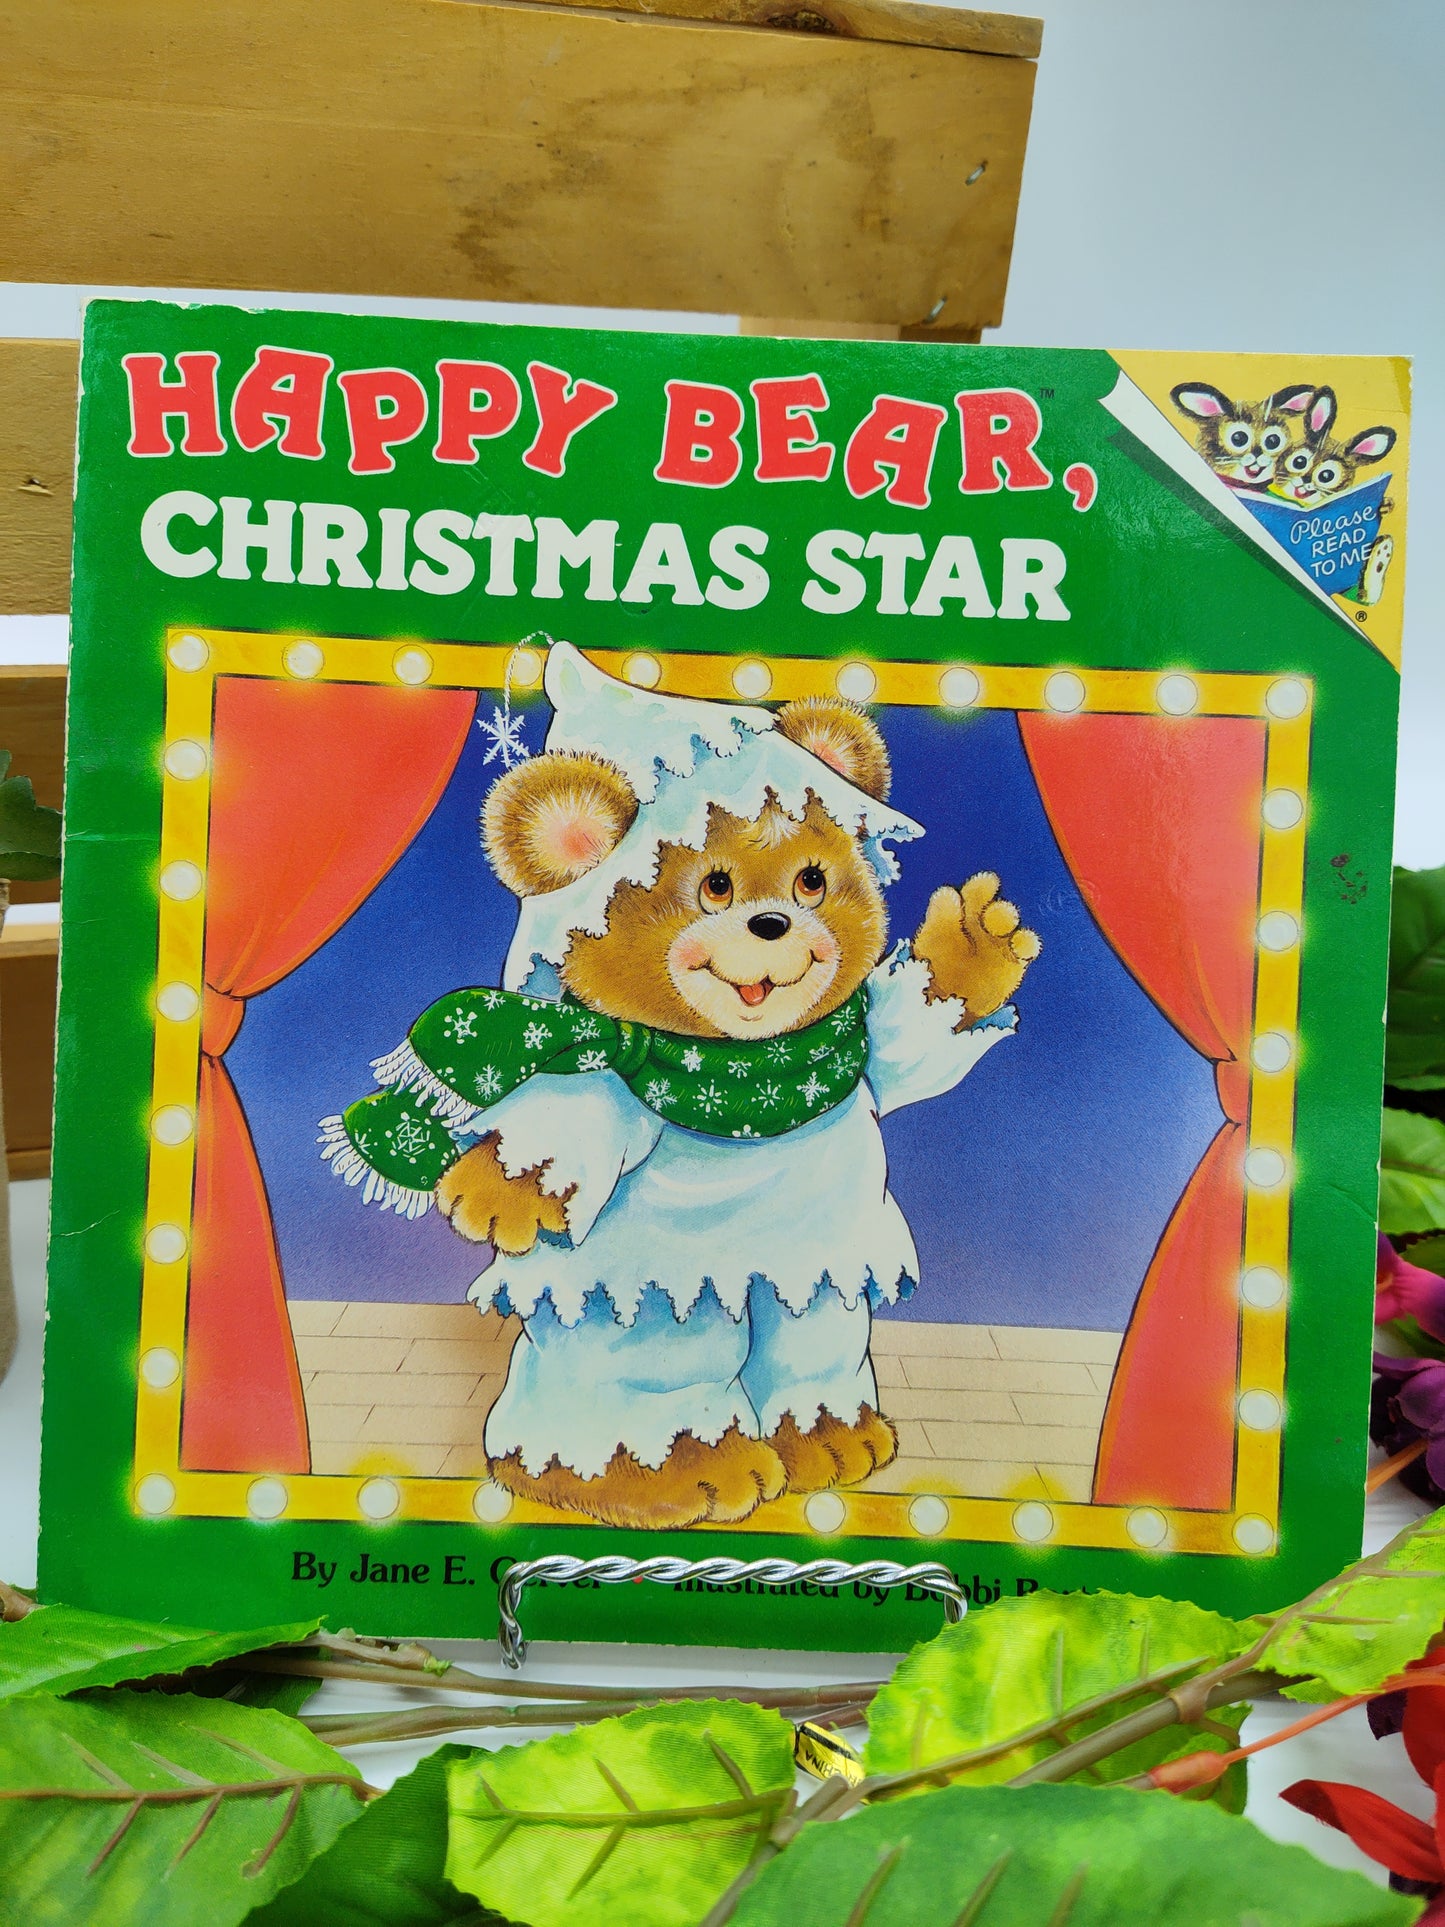 *Happy Bear, Christmas Star Children's Book